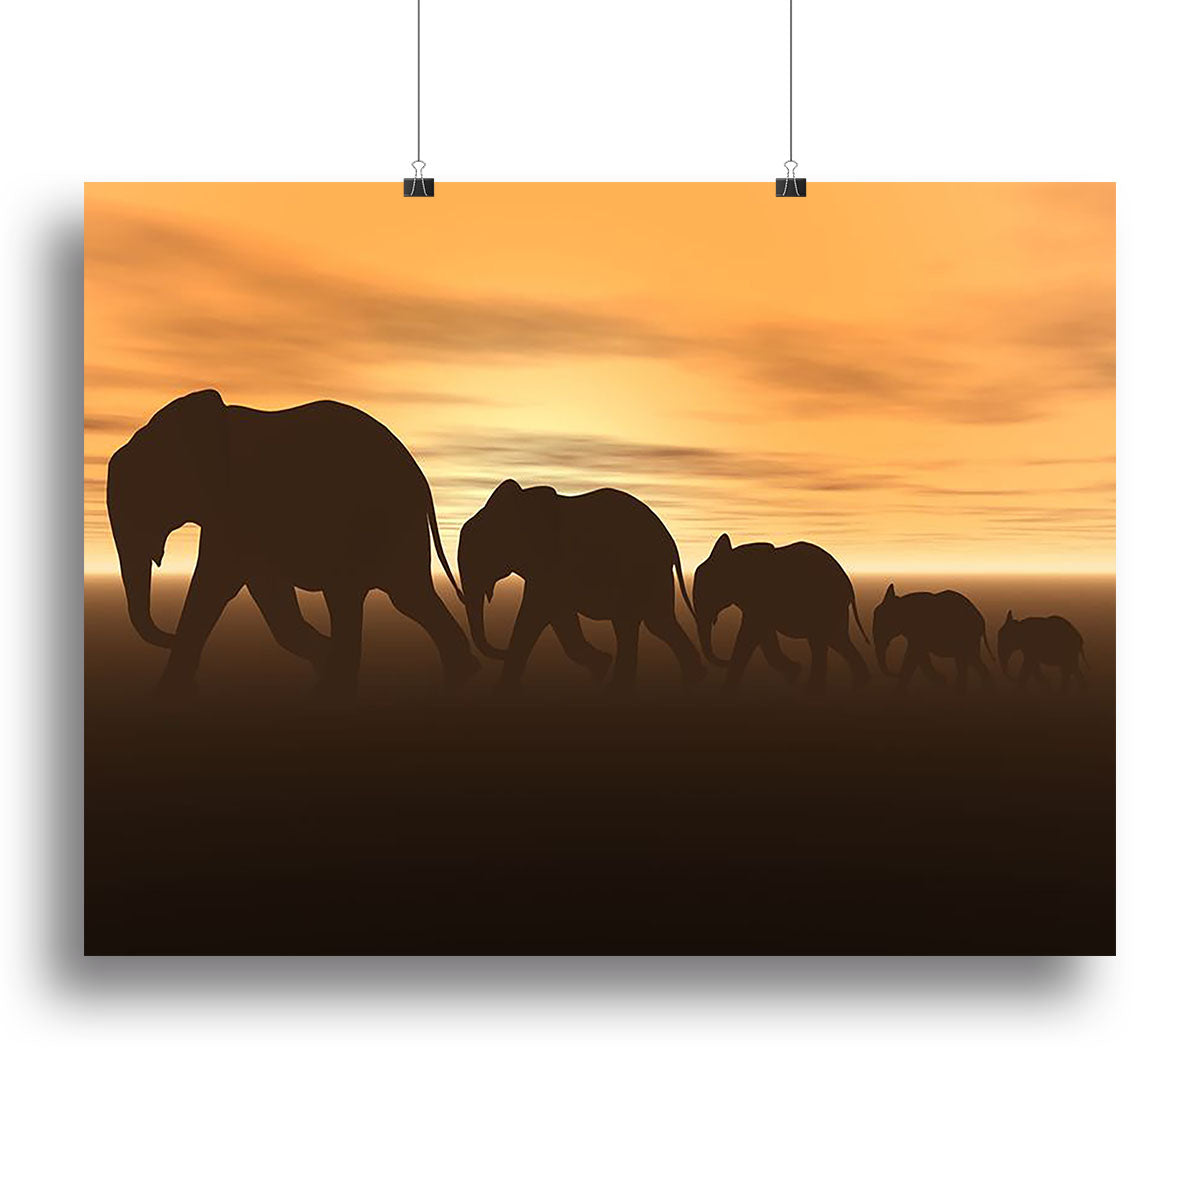 3D render of elephants Canvas Print or Poster - Canvas Art Rocks - 2